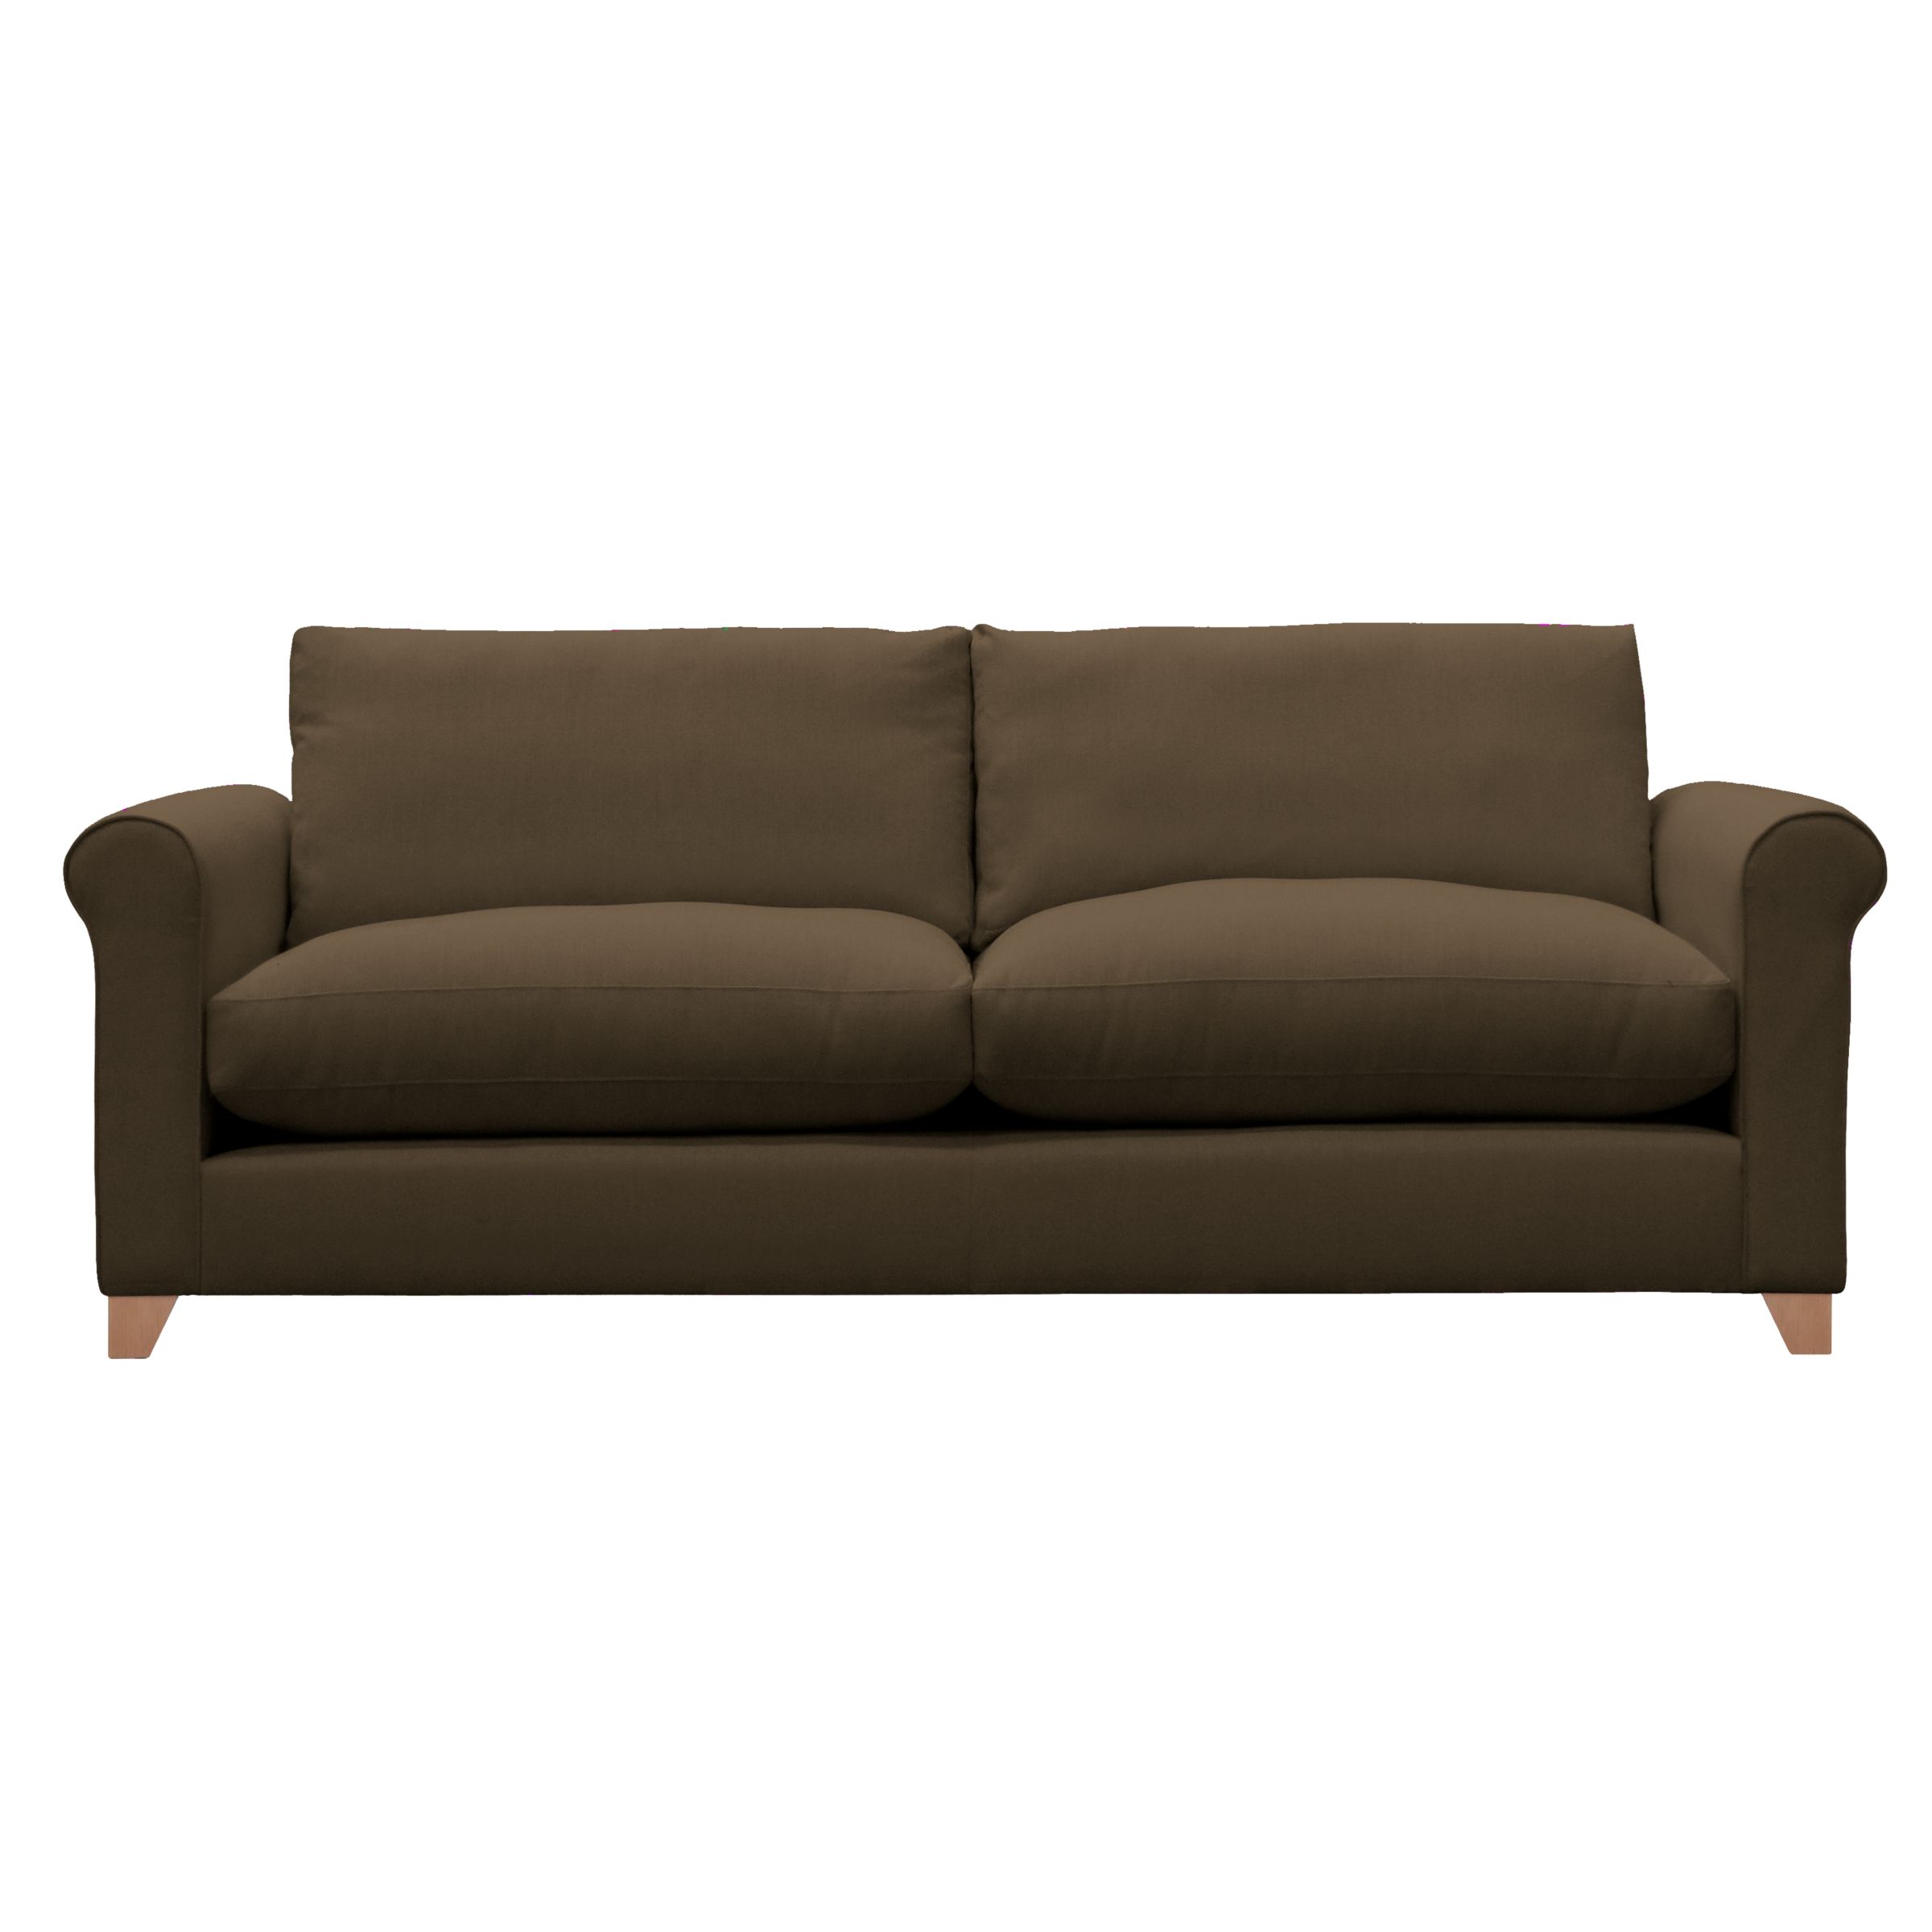 John Lewis Options Scroll Arm Grand Sofa, Eaton Chocolate, width 217cm